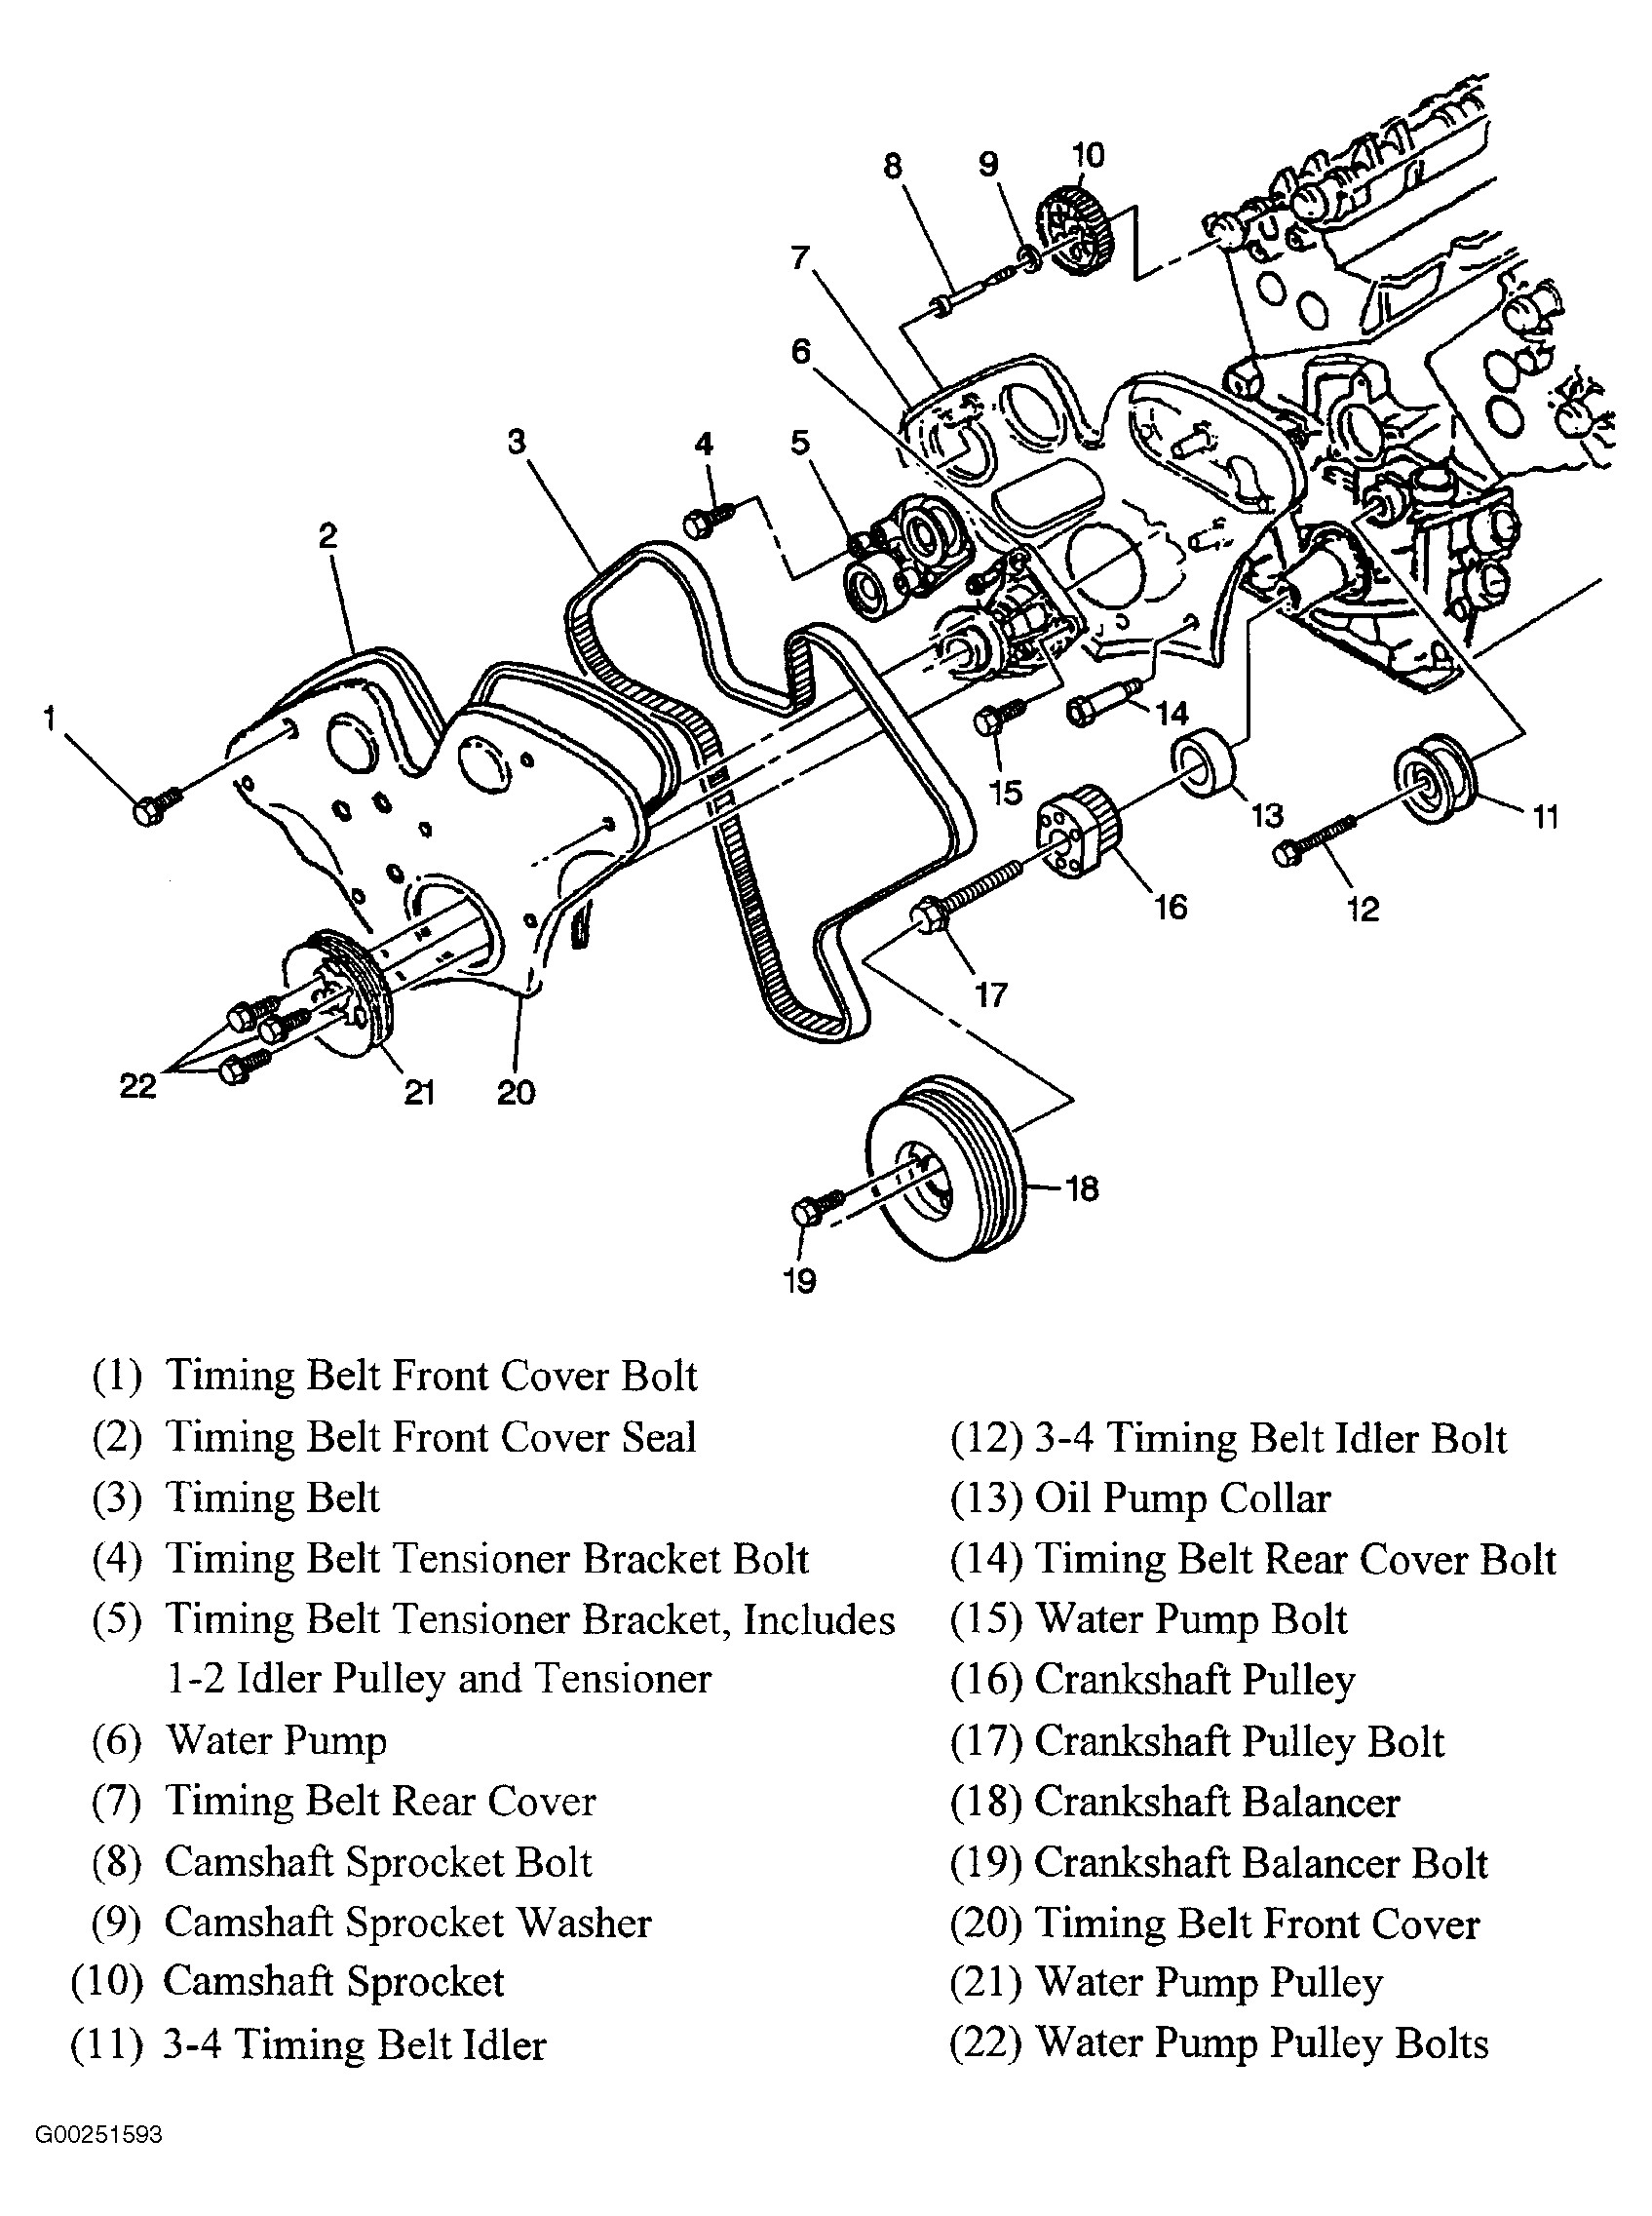 Parts Of Car Engine Diagram 2003 Cadillac Cts Serpentine Belt Diagram Auto Of Parts Of Car Engine Diagram